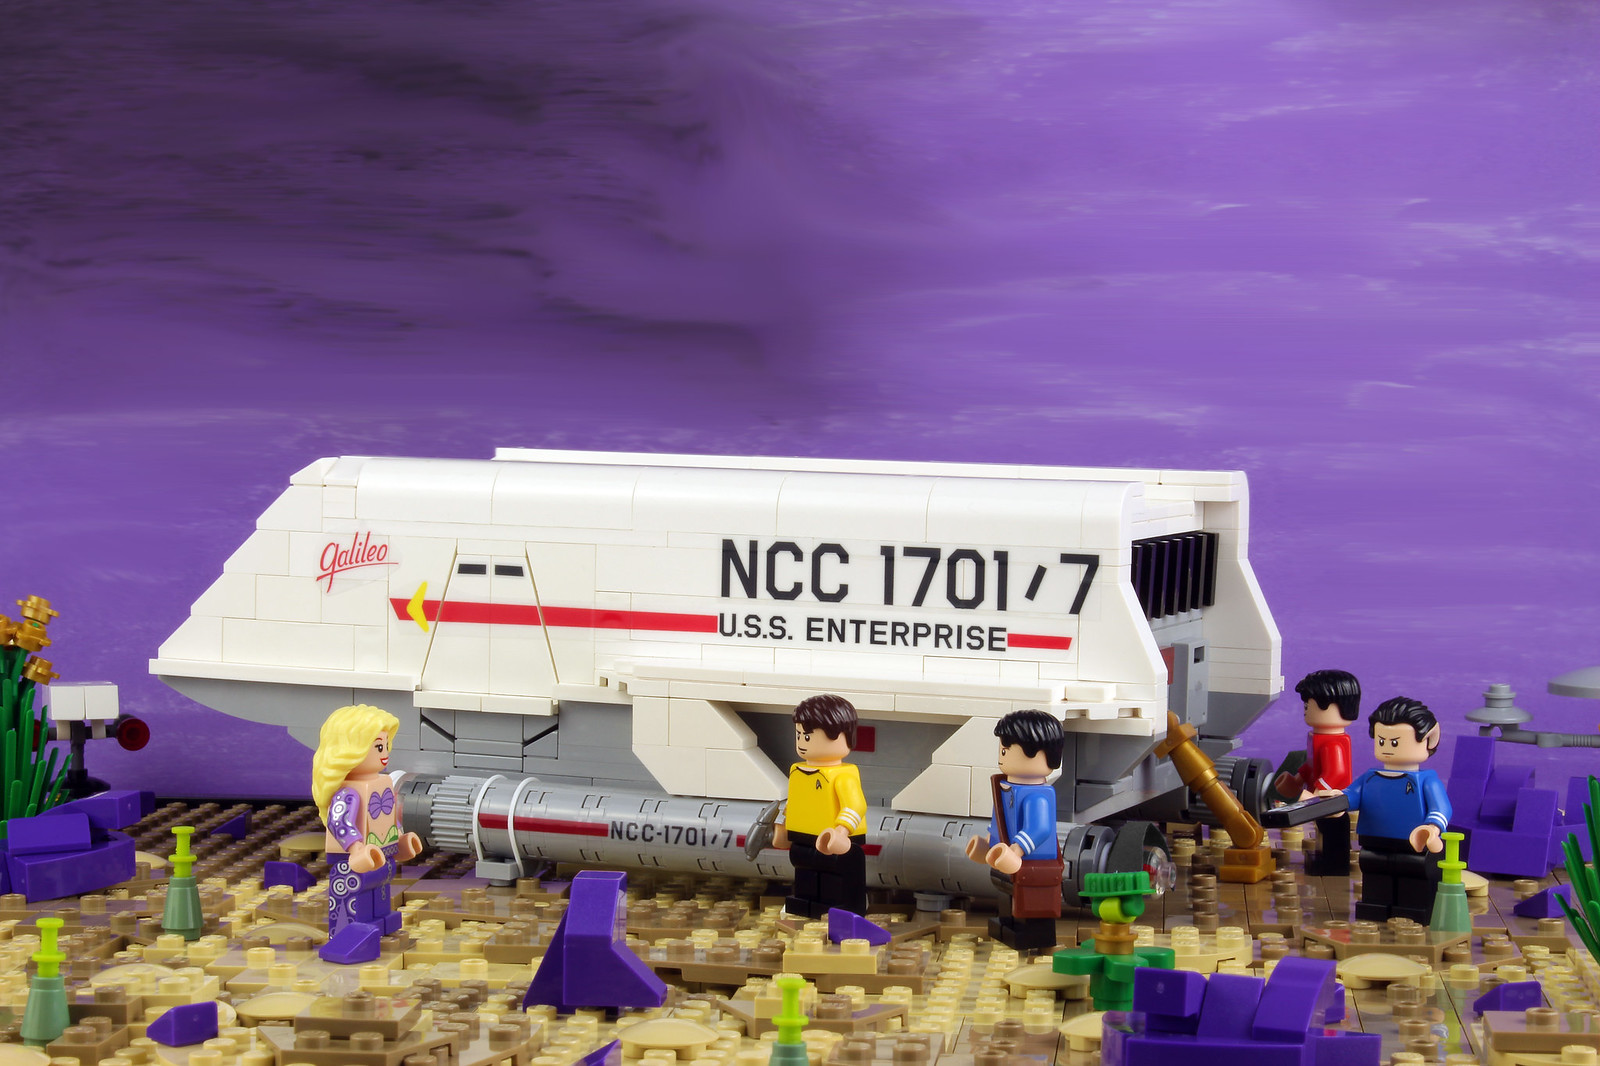 Enterprise 1701 shuttle Galileo